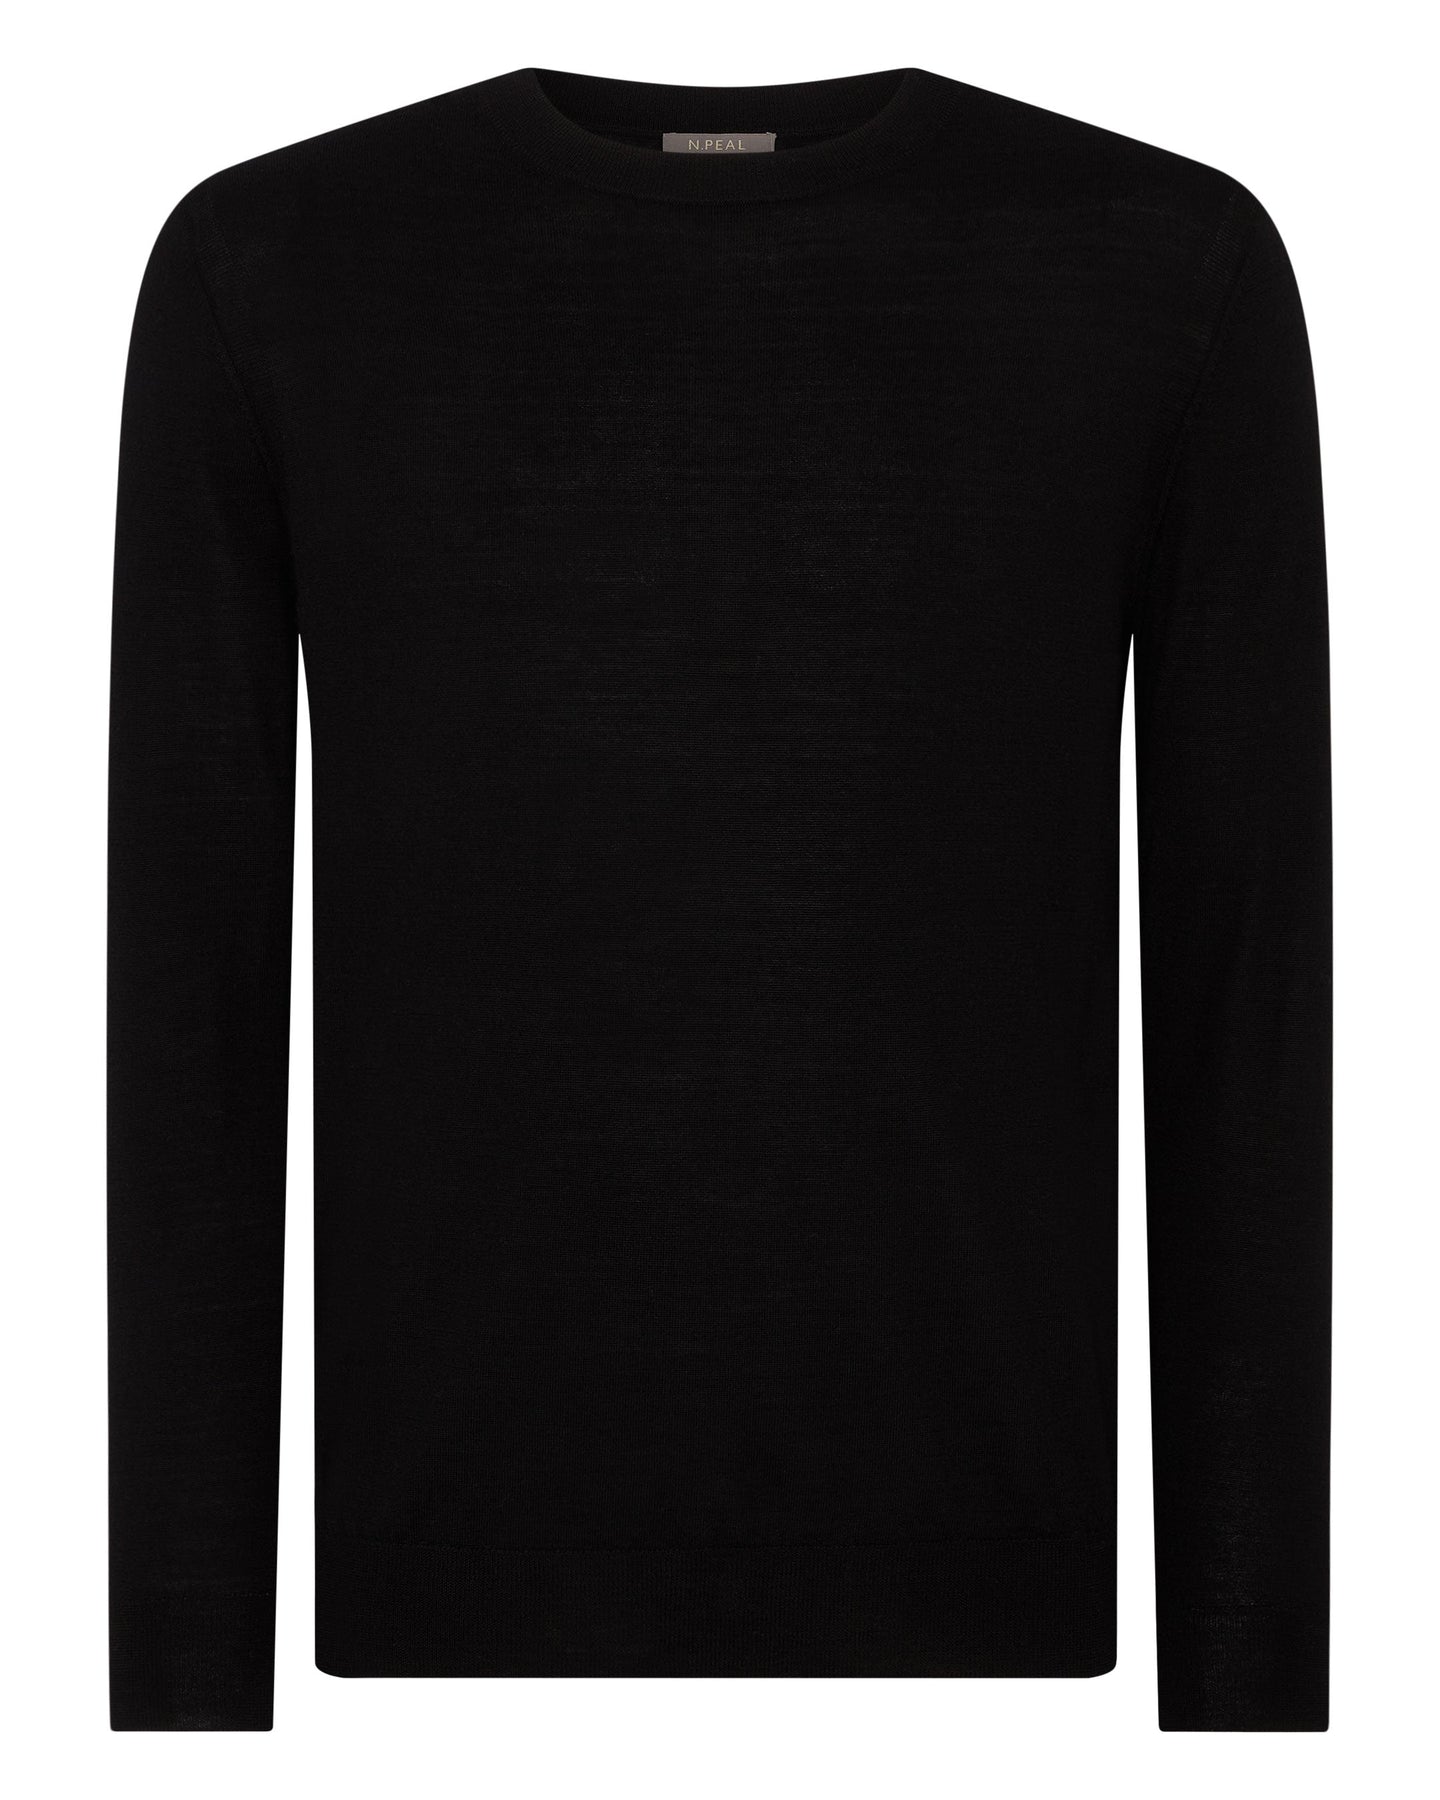 N.Peal Fine Gauge Cashmere Round Neck Sweater Black